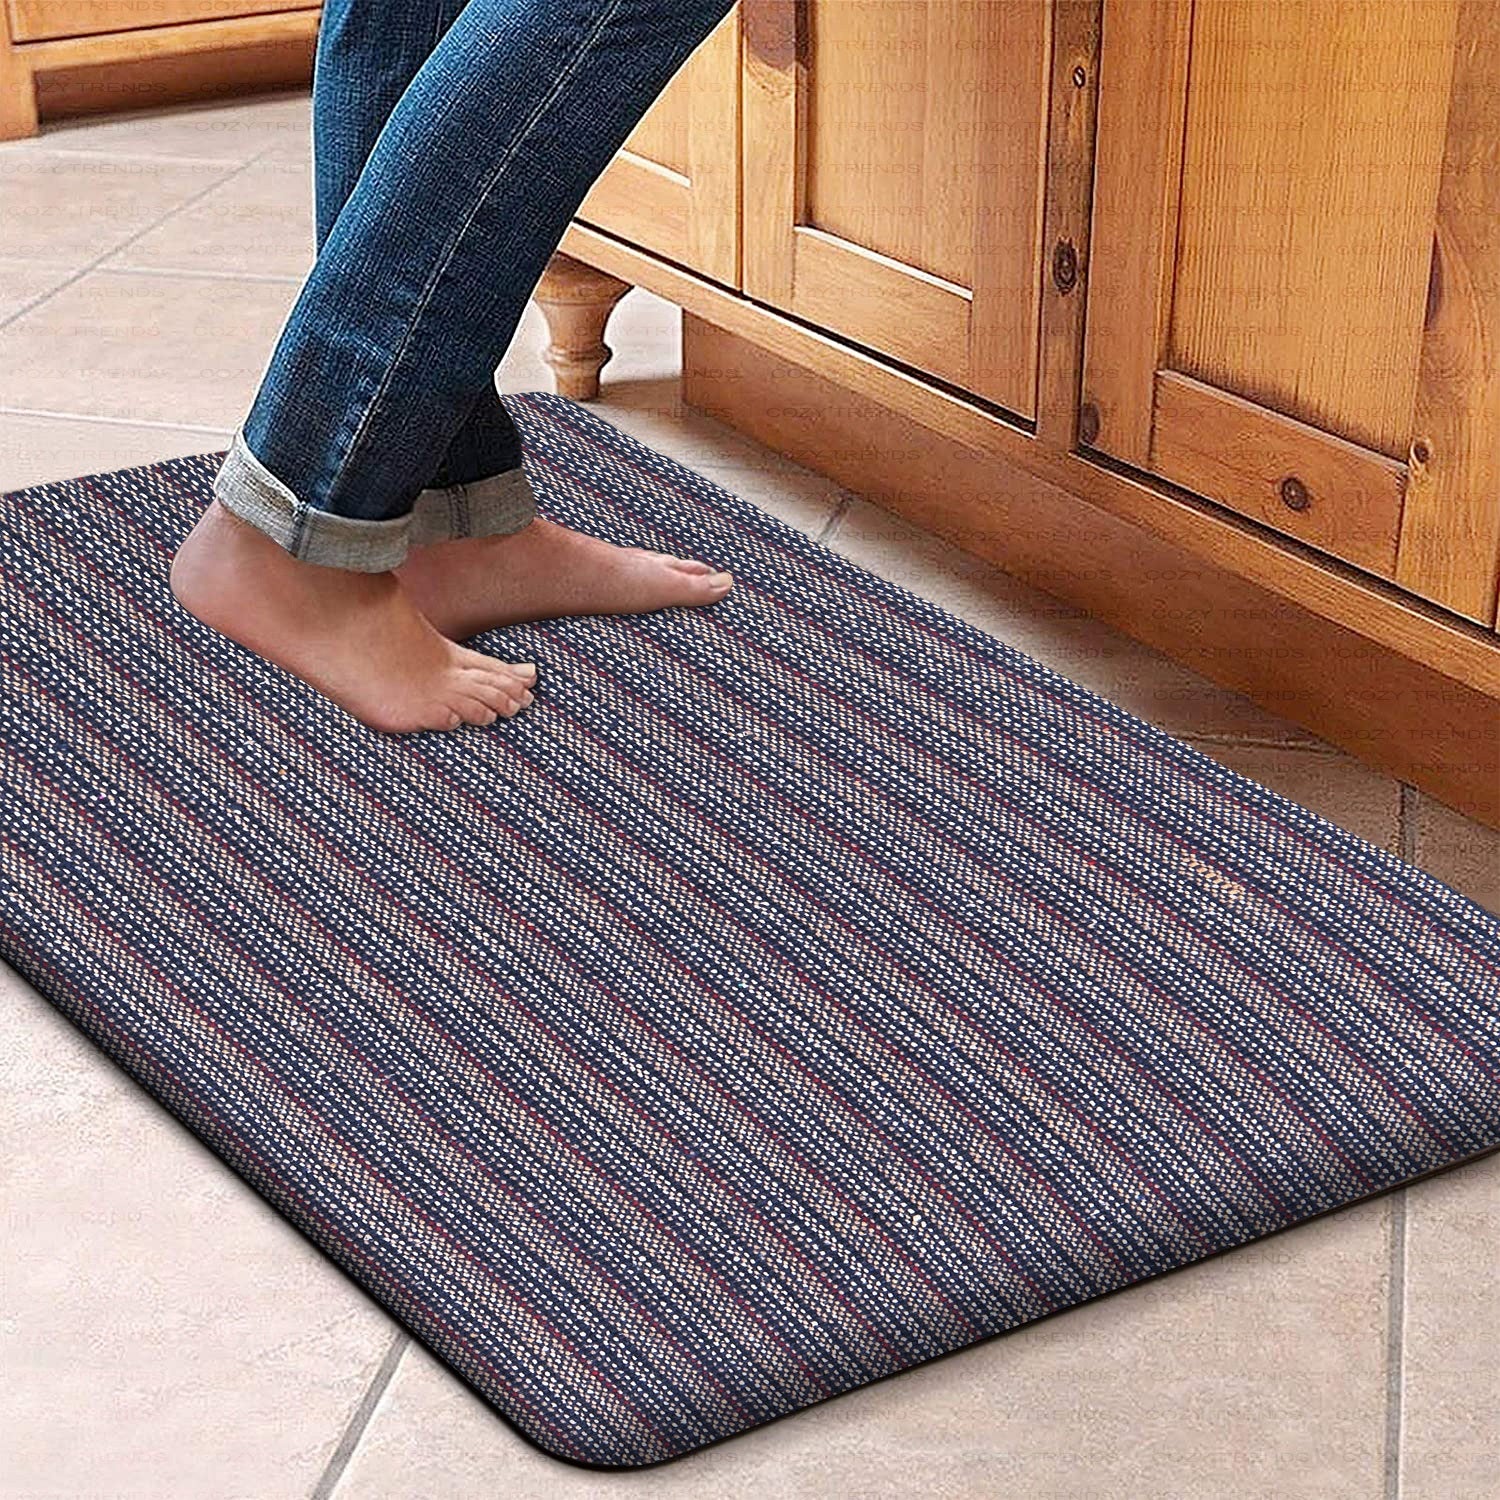 Anti Fatigue Kitchen Rug, Cushioned Kitchen Floor Mats Set Comfort